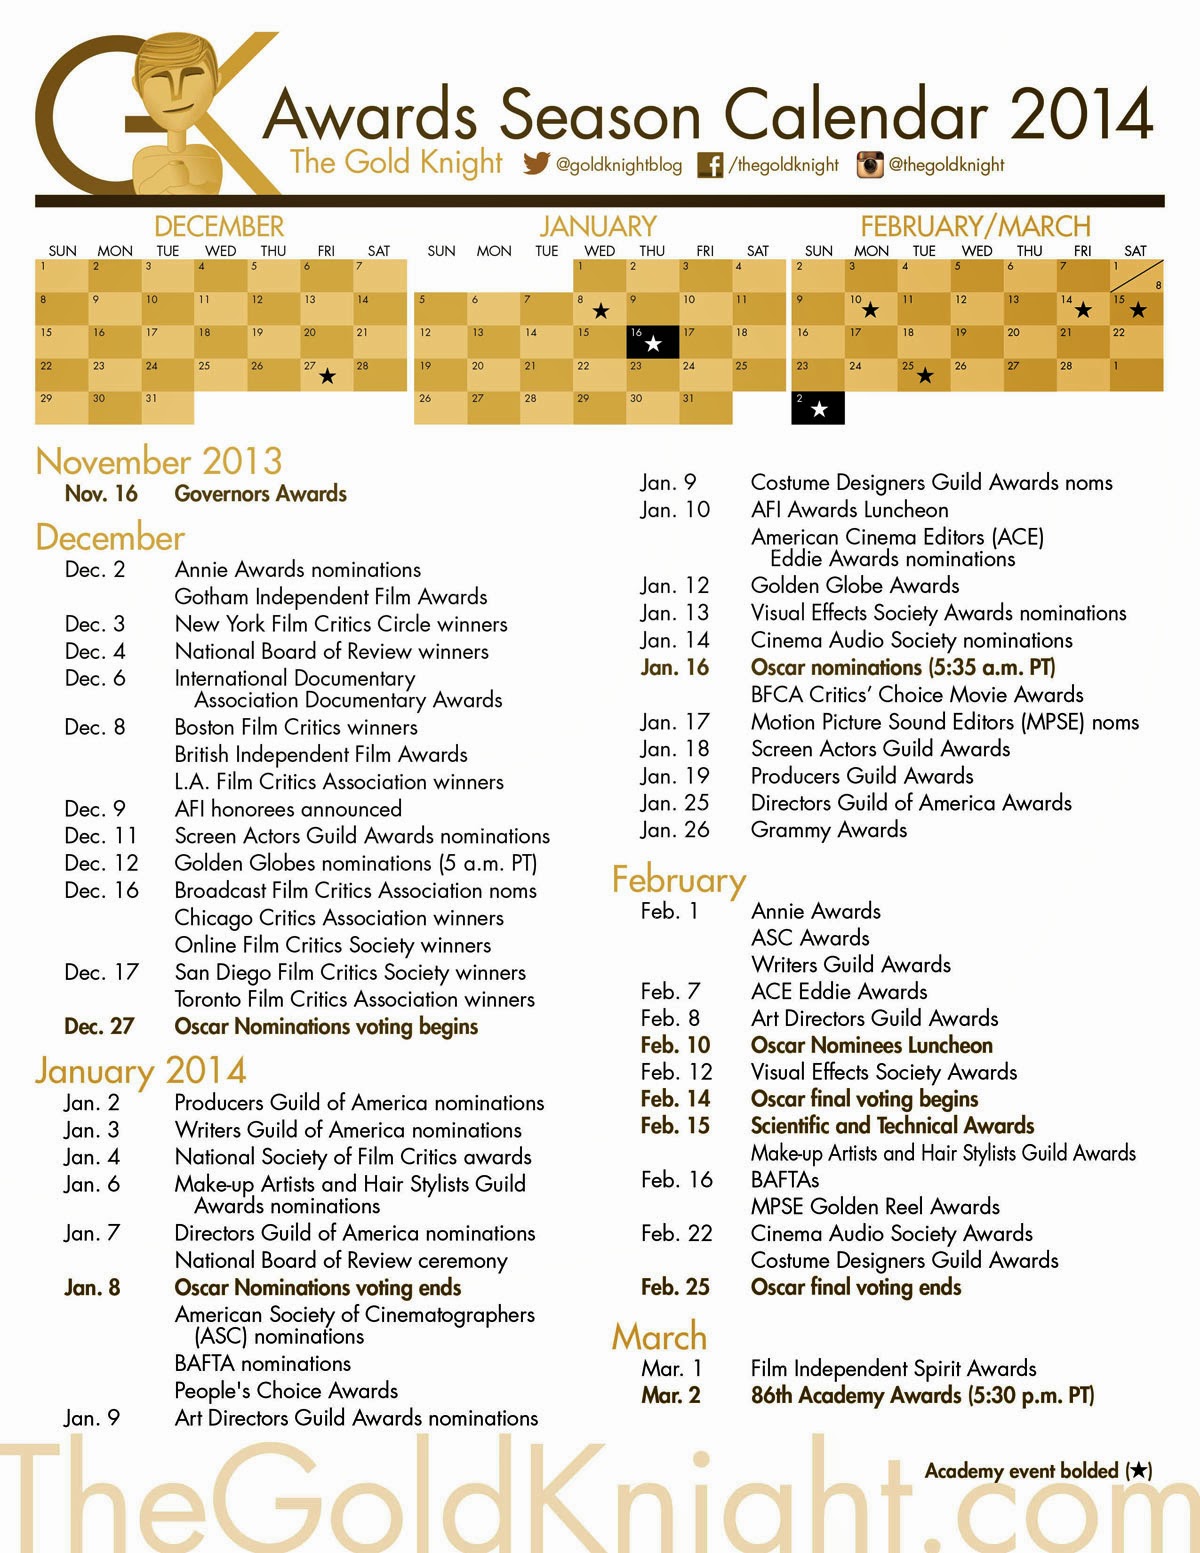 to the 2014 Awards Season; download our printable calendar PDF